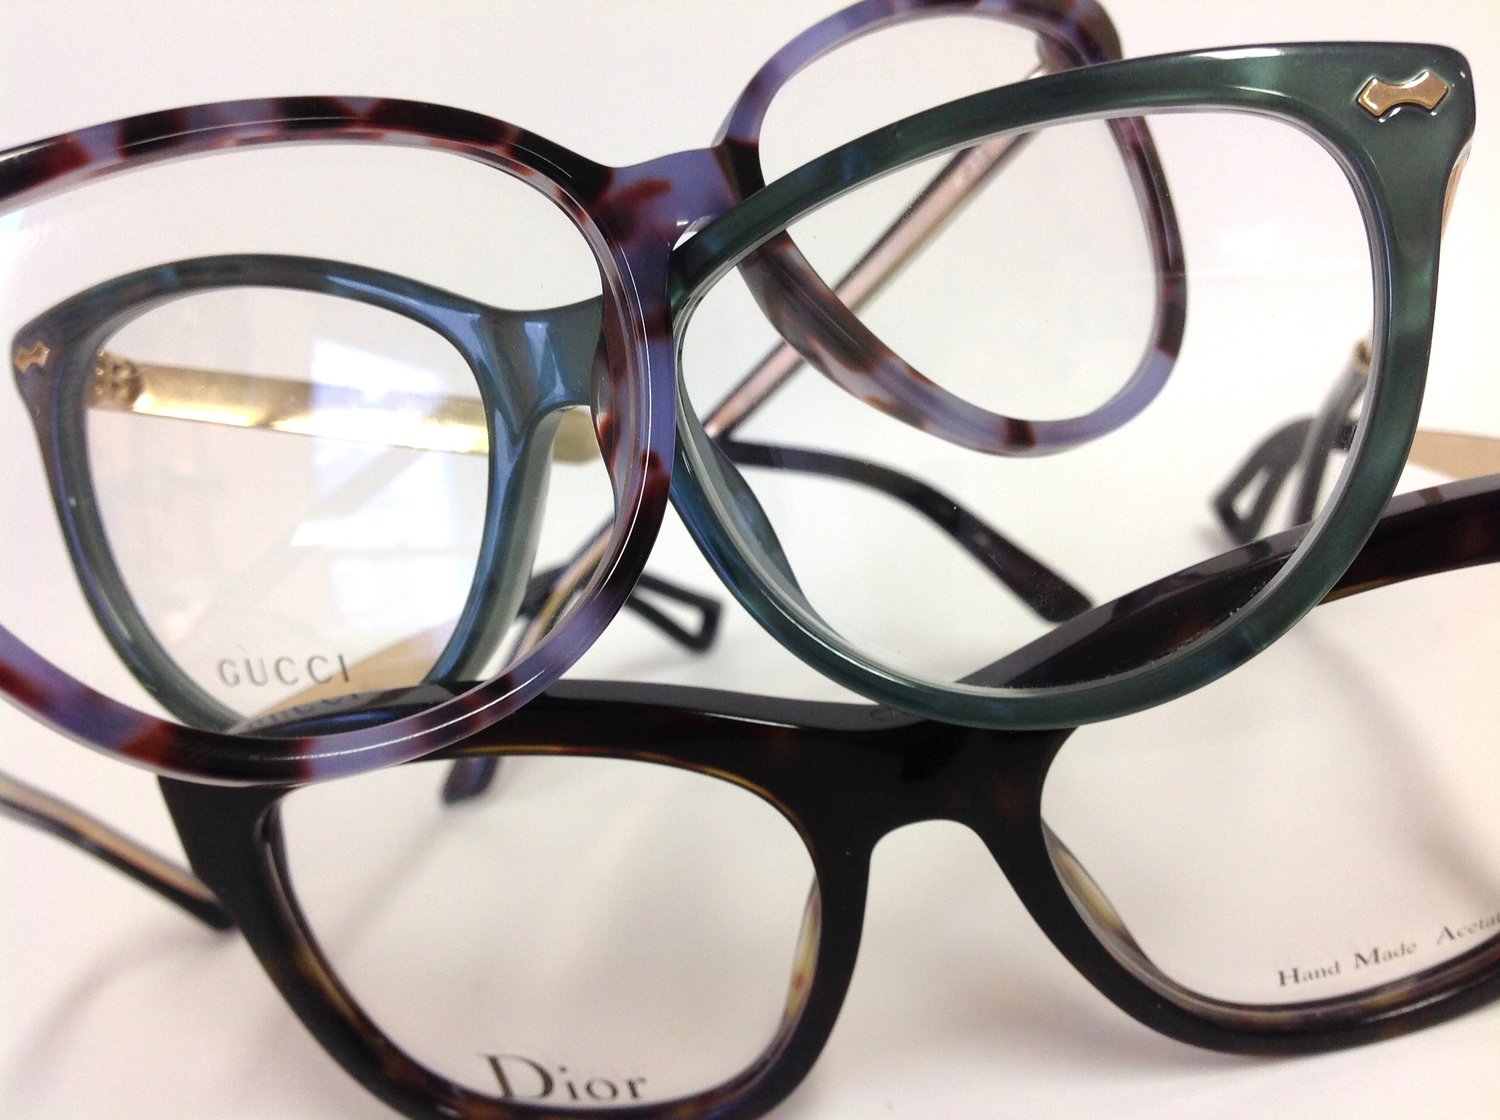 Everyday glasses.  Grey hair and glasses, Glasses fashion women, Eye wear  glasses